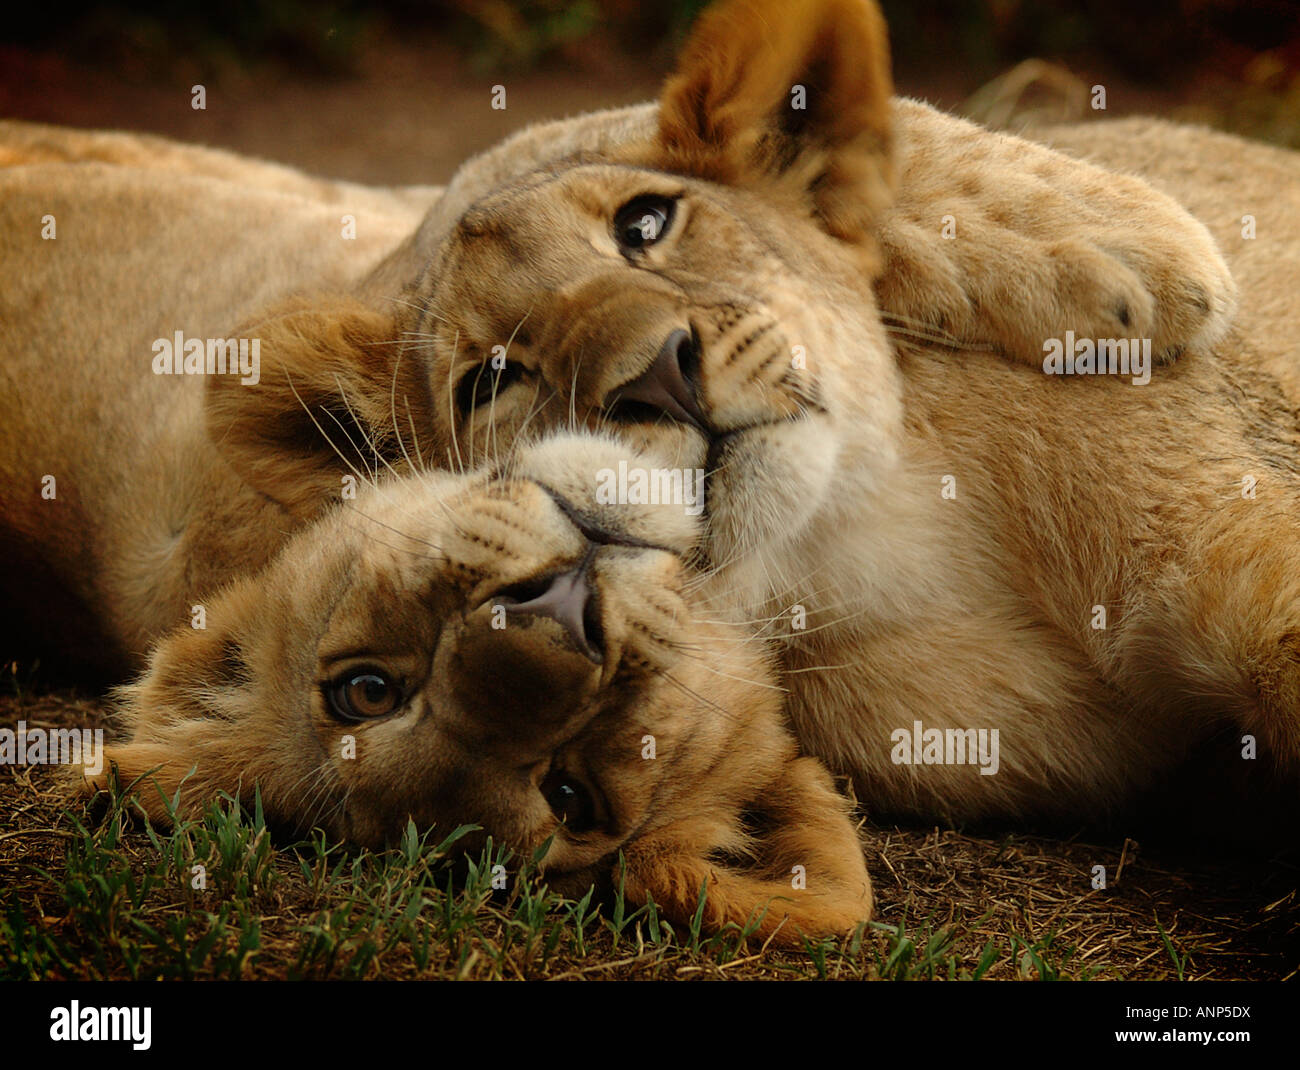 Lion cubs cuddling Stock Photo